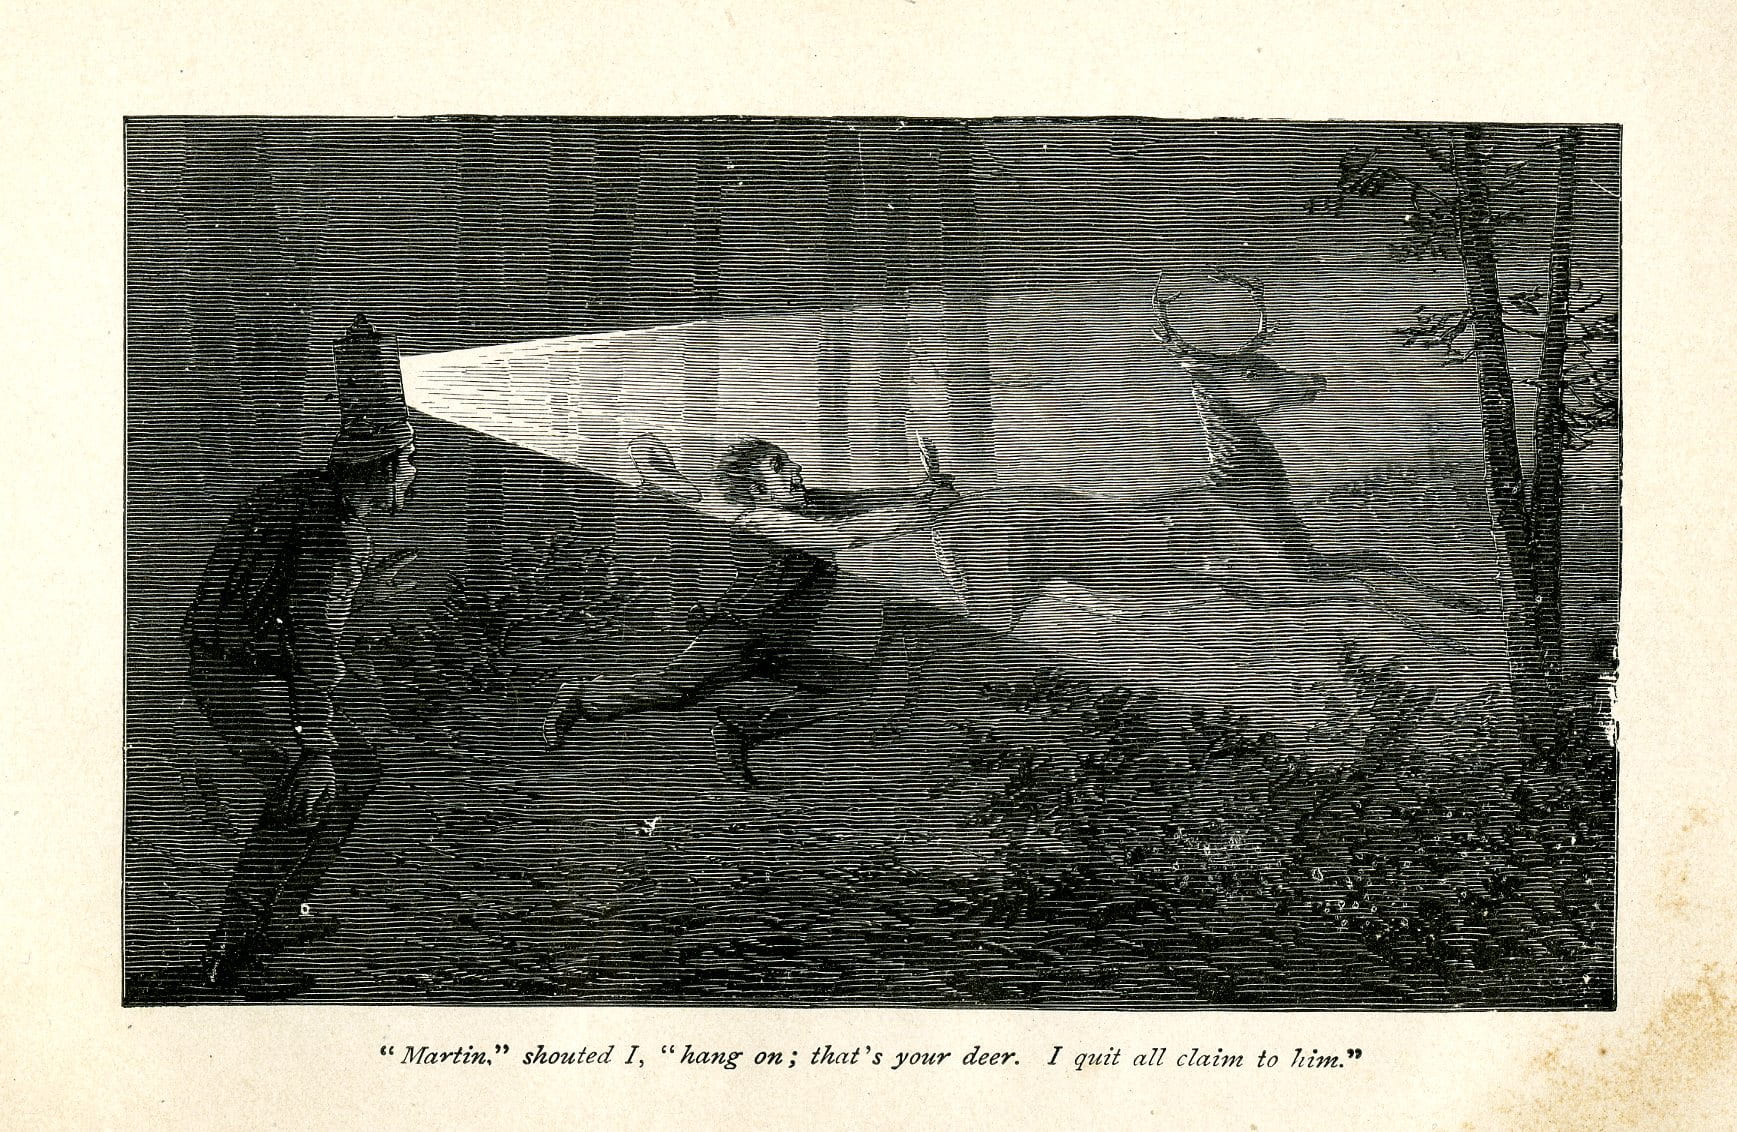 Jacklighting illustration from Murray's Adirondack Adventures